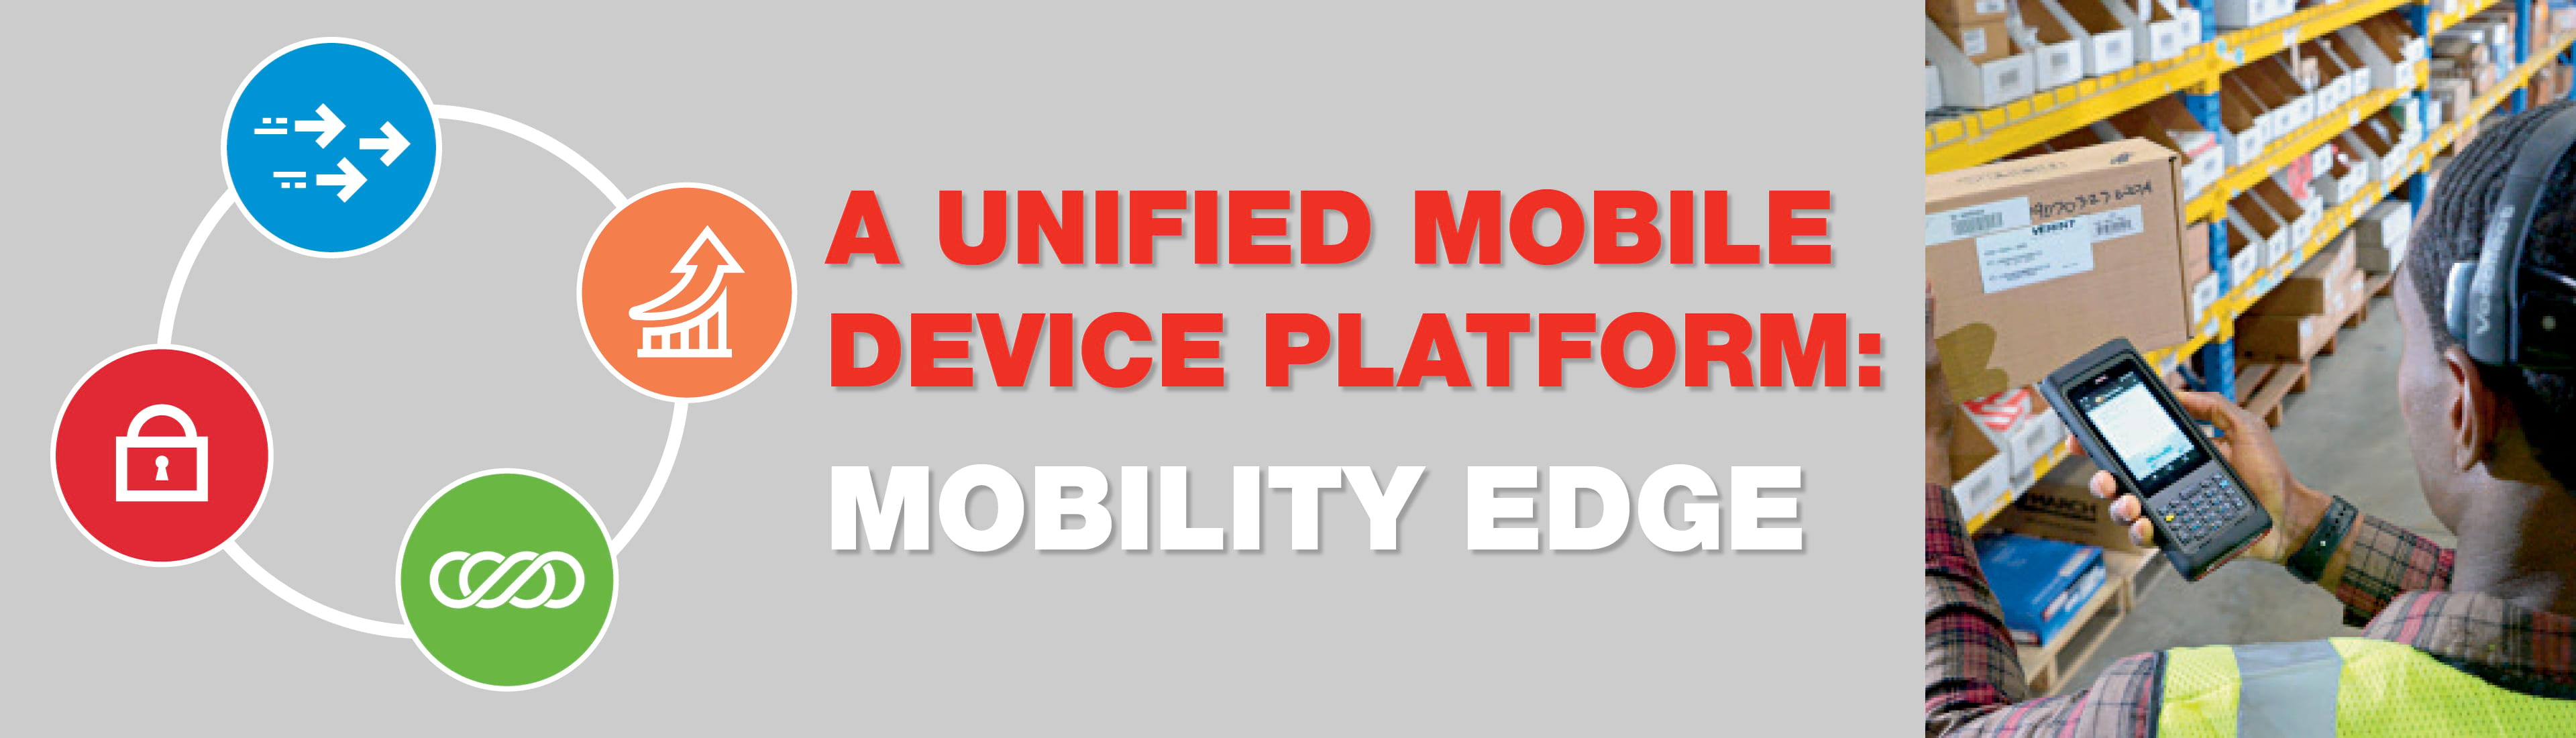 Mobility-edge.jpg